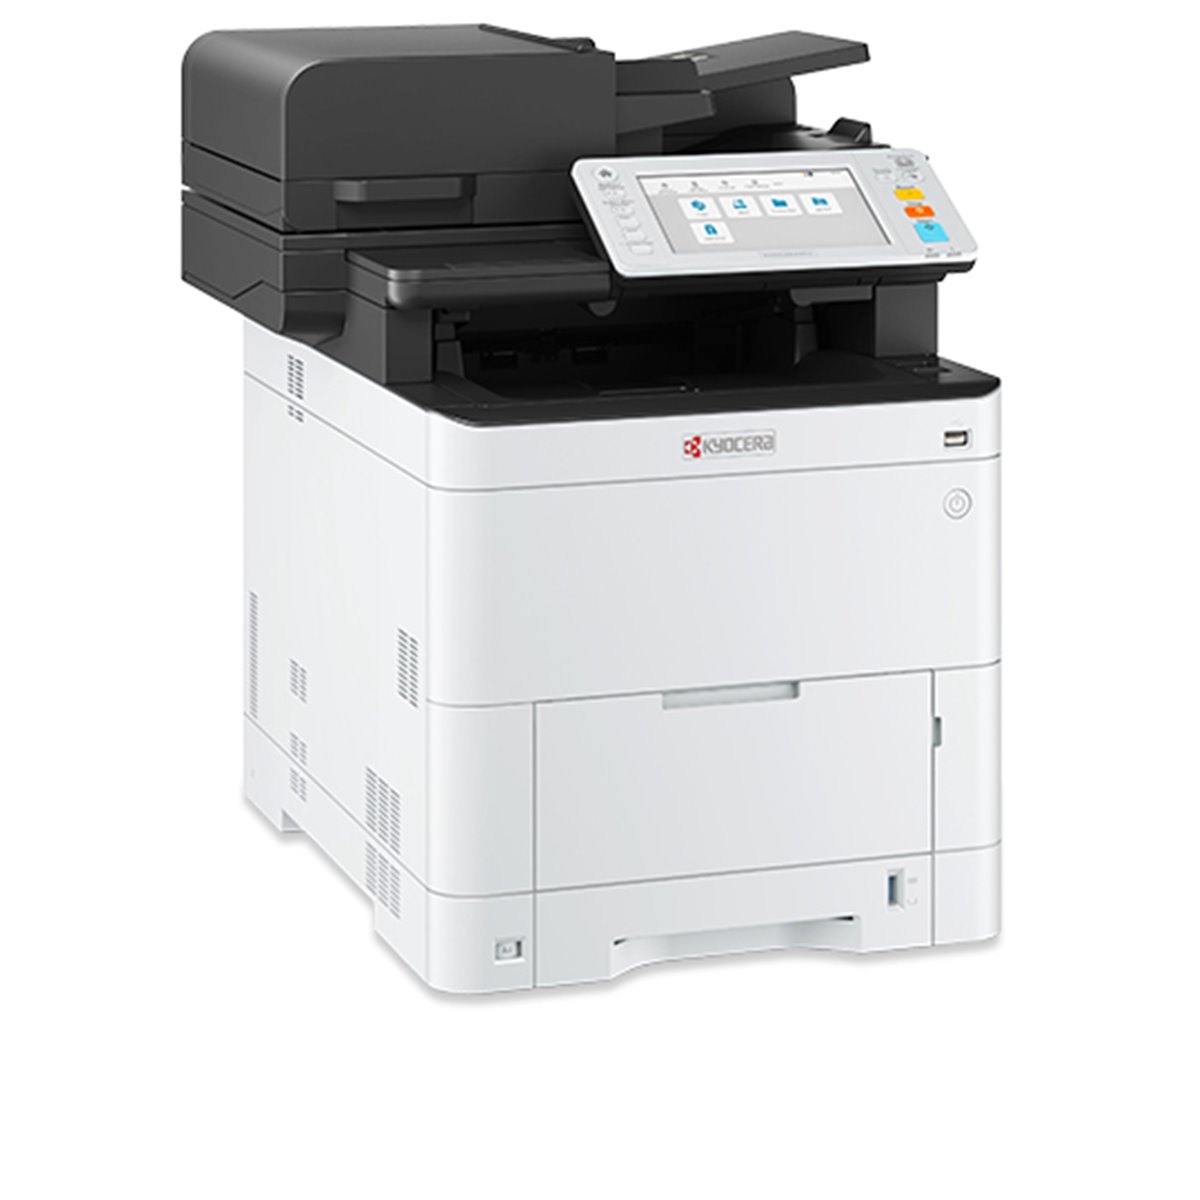 ECOSYS MA3500cifx MFP Laser Printer